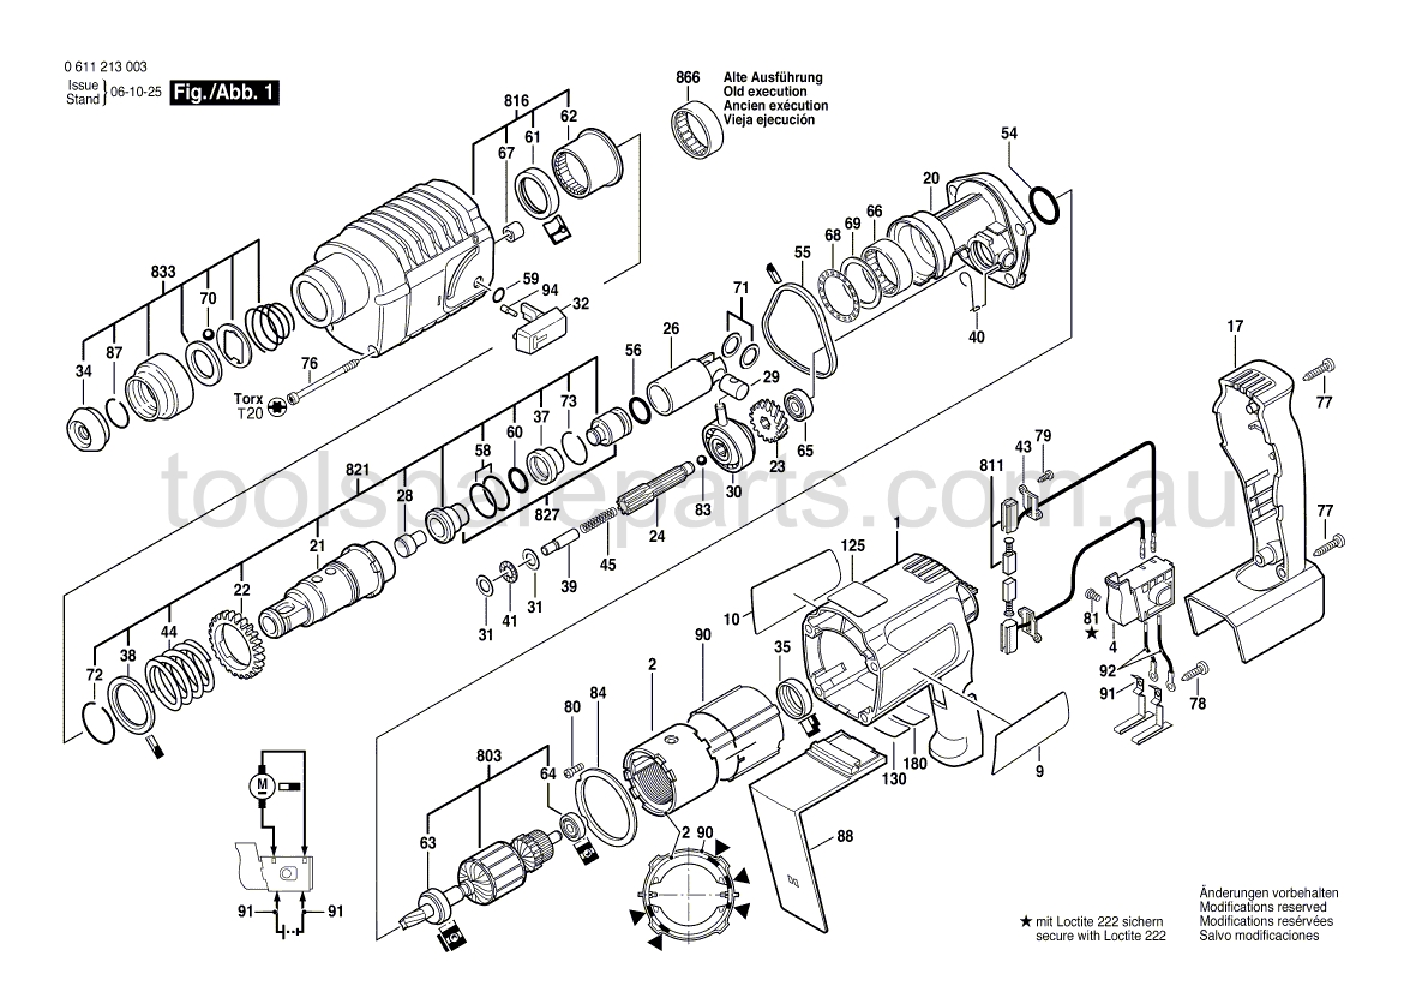 Bosch GBH 24 V 0611213025  Diagram 1